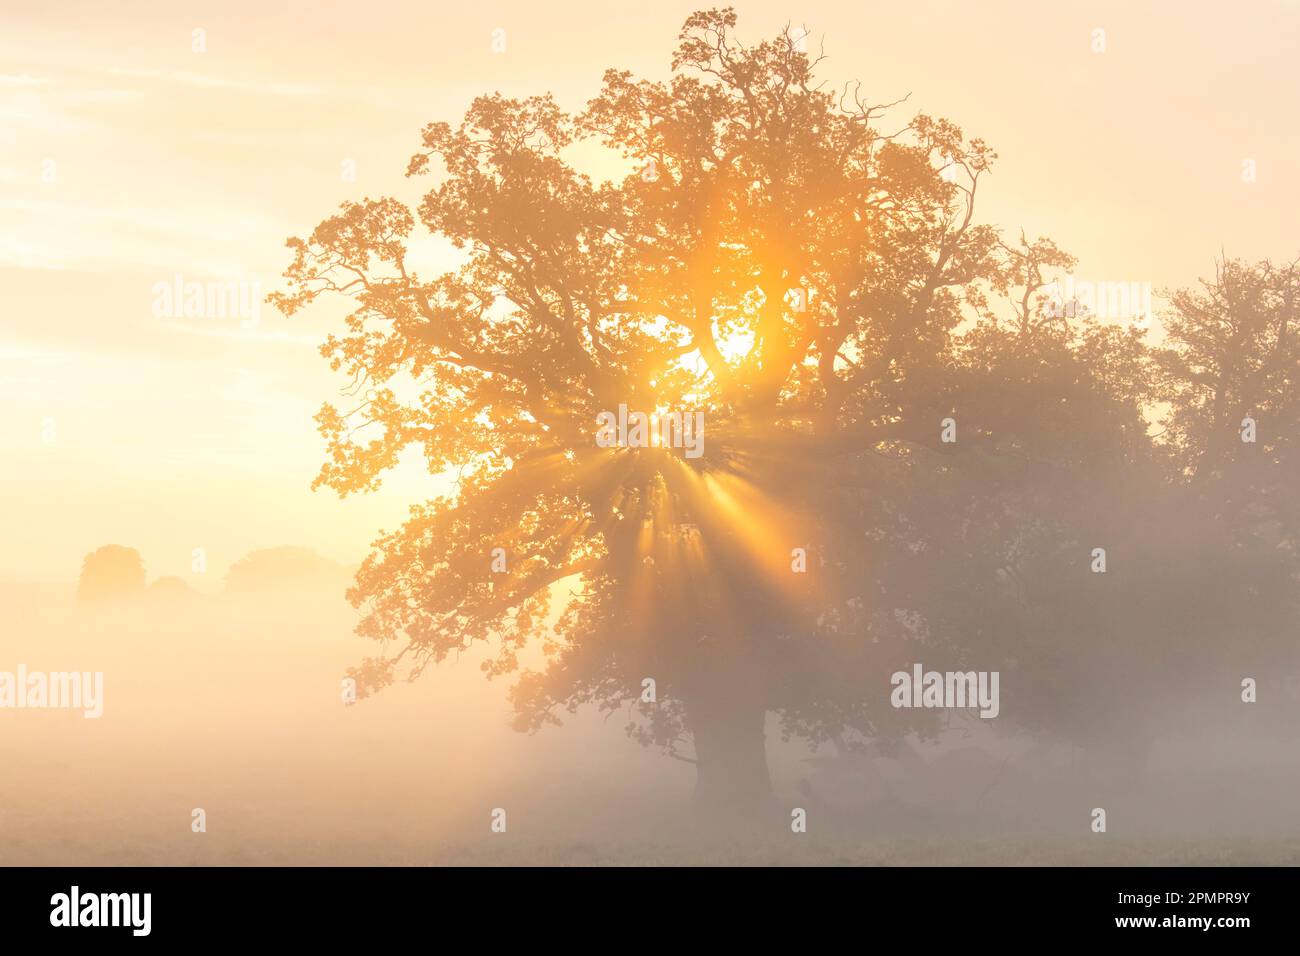 Sun shining through foliage of common oak / pedunculate oak / European oak / English oak tree (Quercus robur) in early morning fog at sunrise / dawn Stock Photo